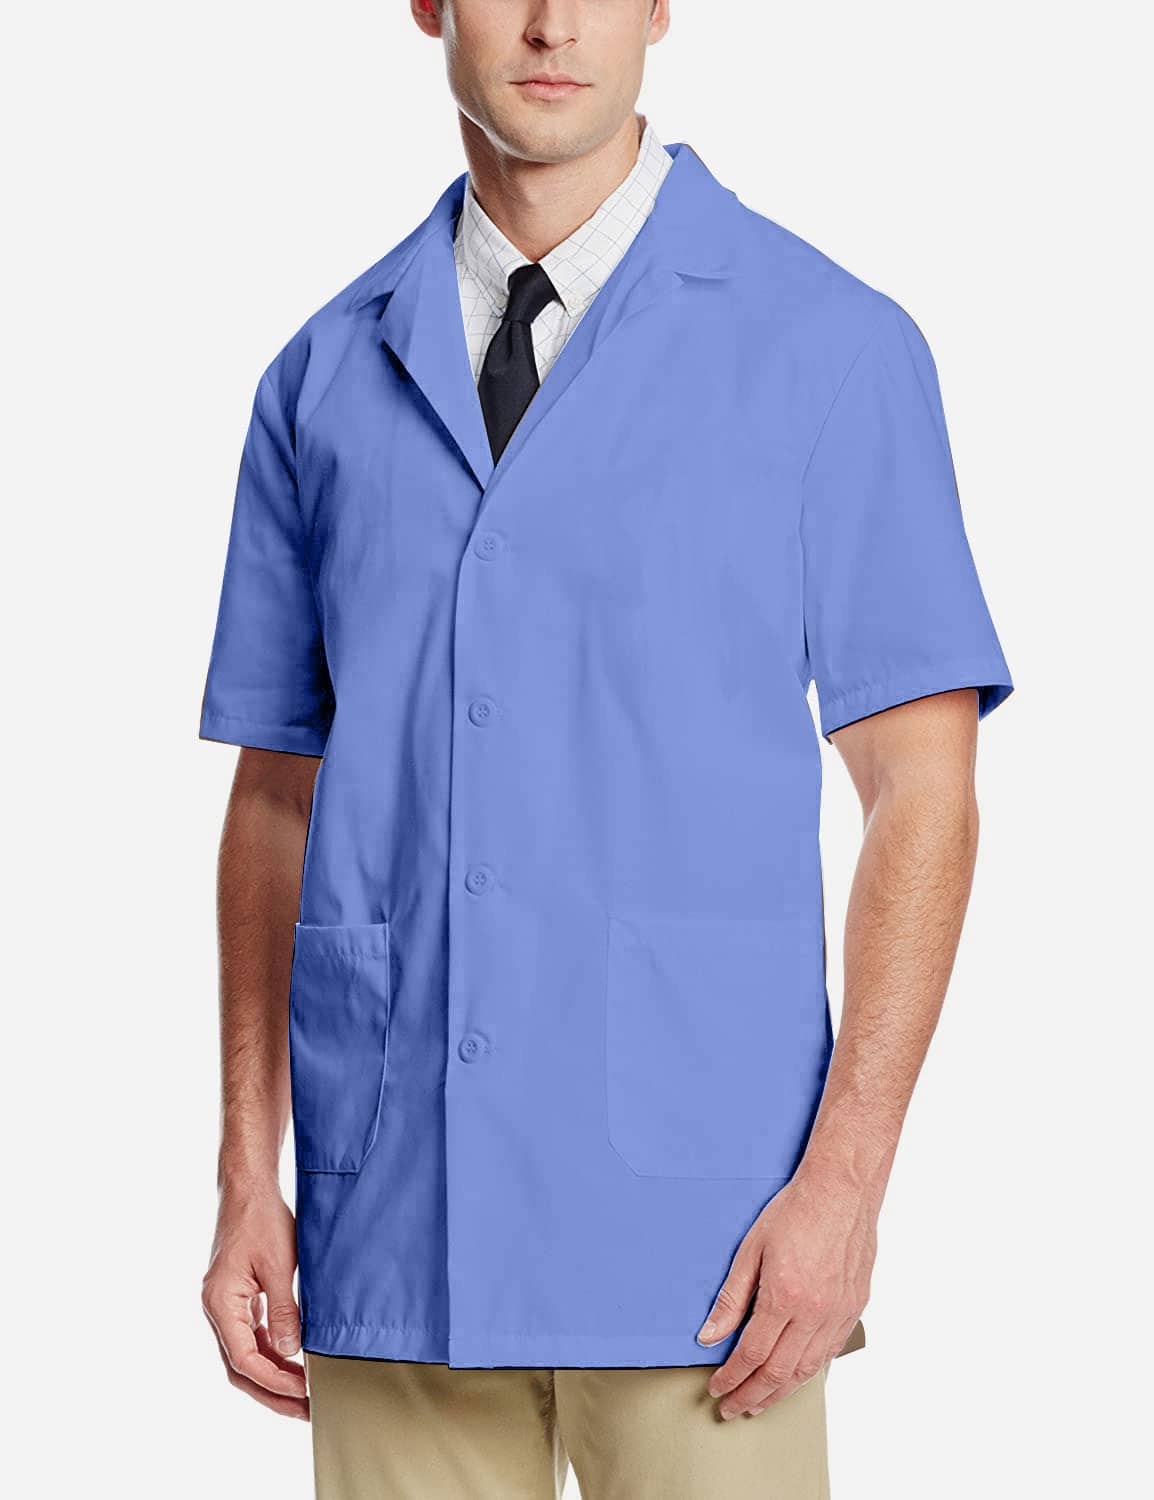 sky blue lab coat